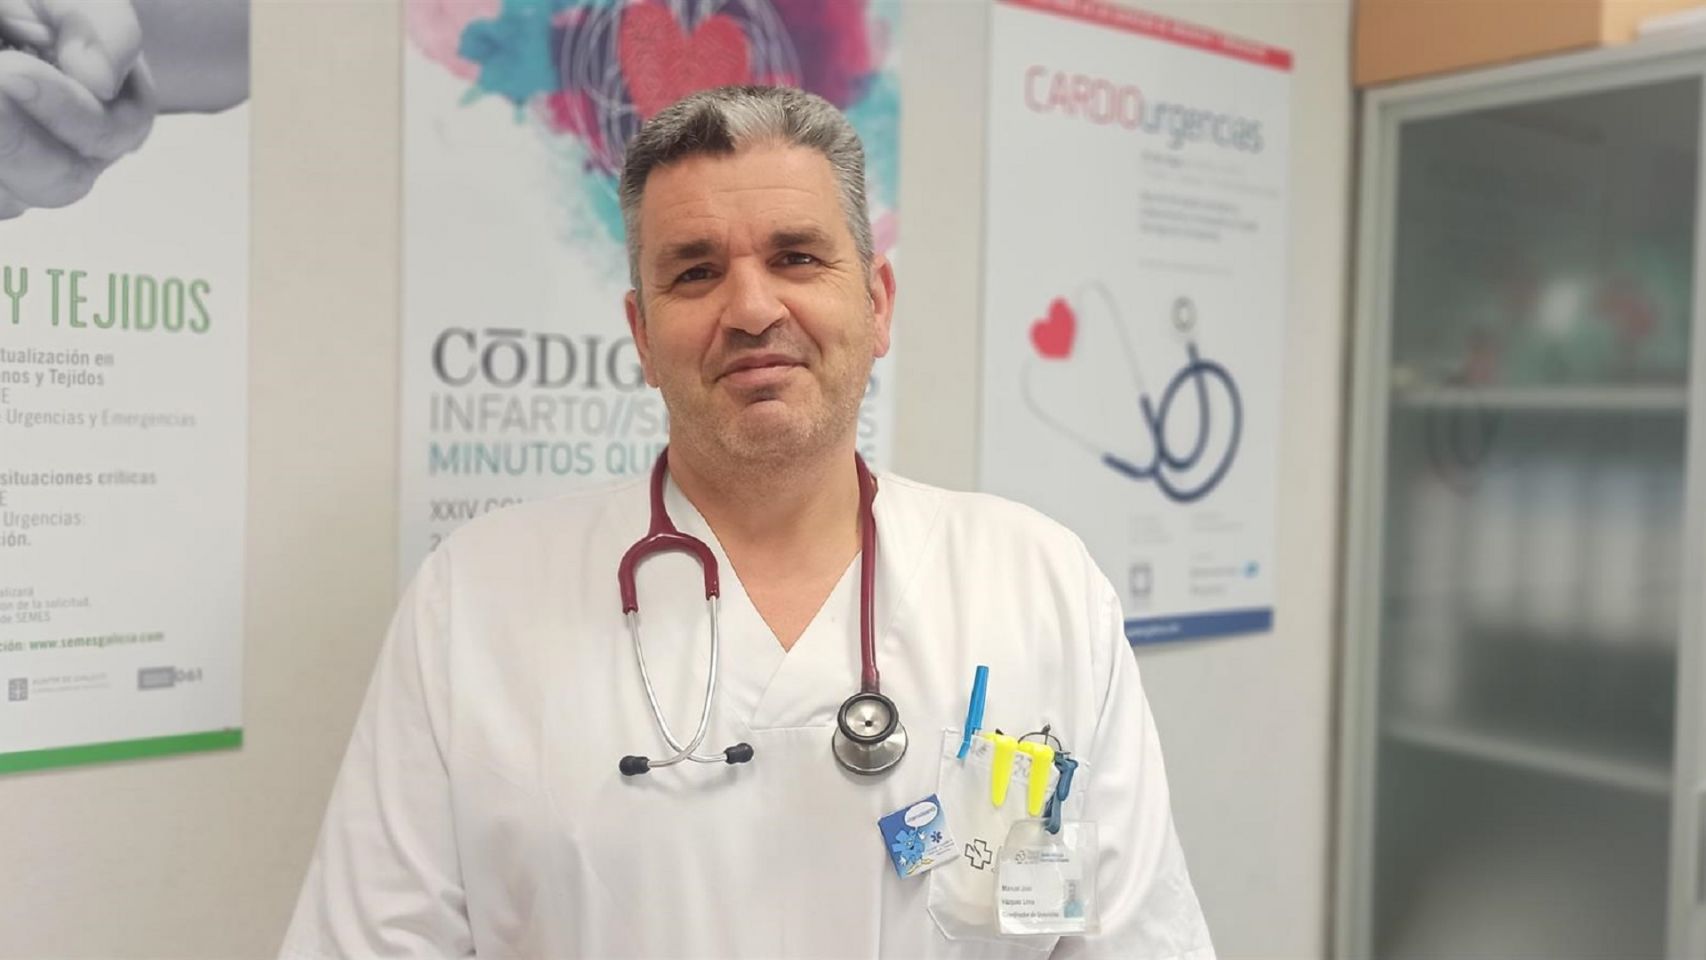 El doctor Tato Vázquez Lima, coordinador de Urgencias en el Hospital do Salnés.